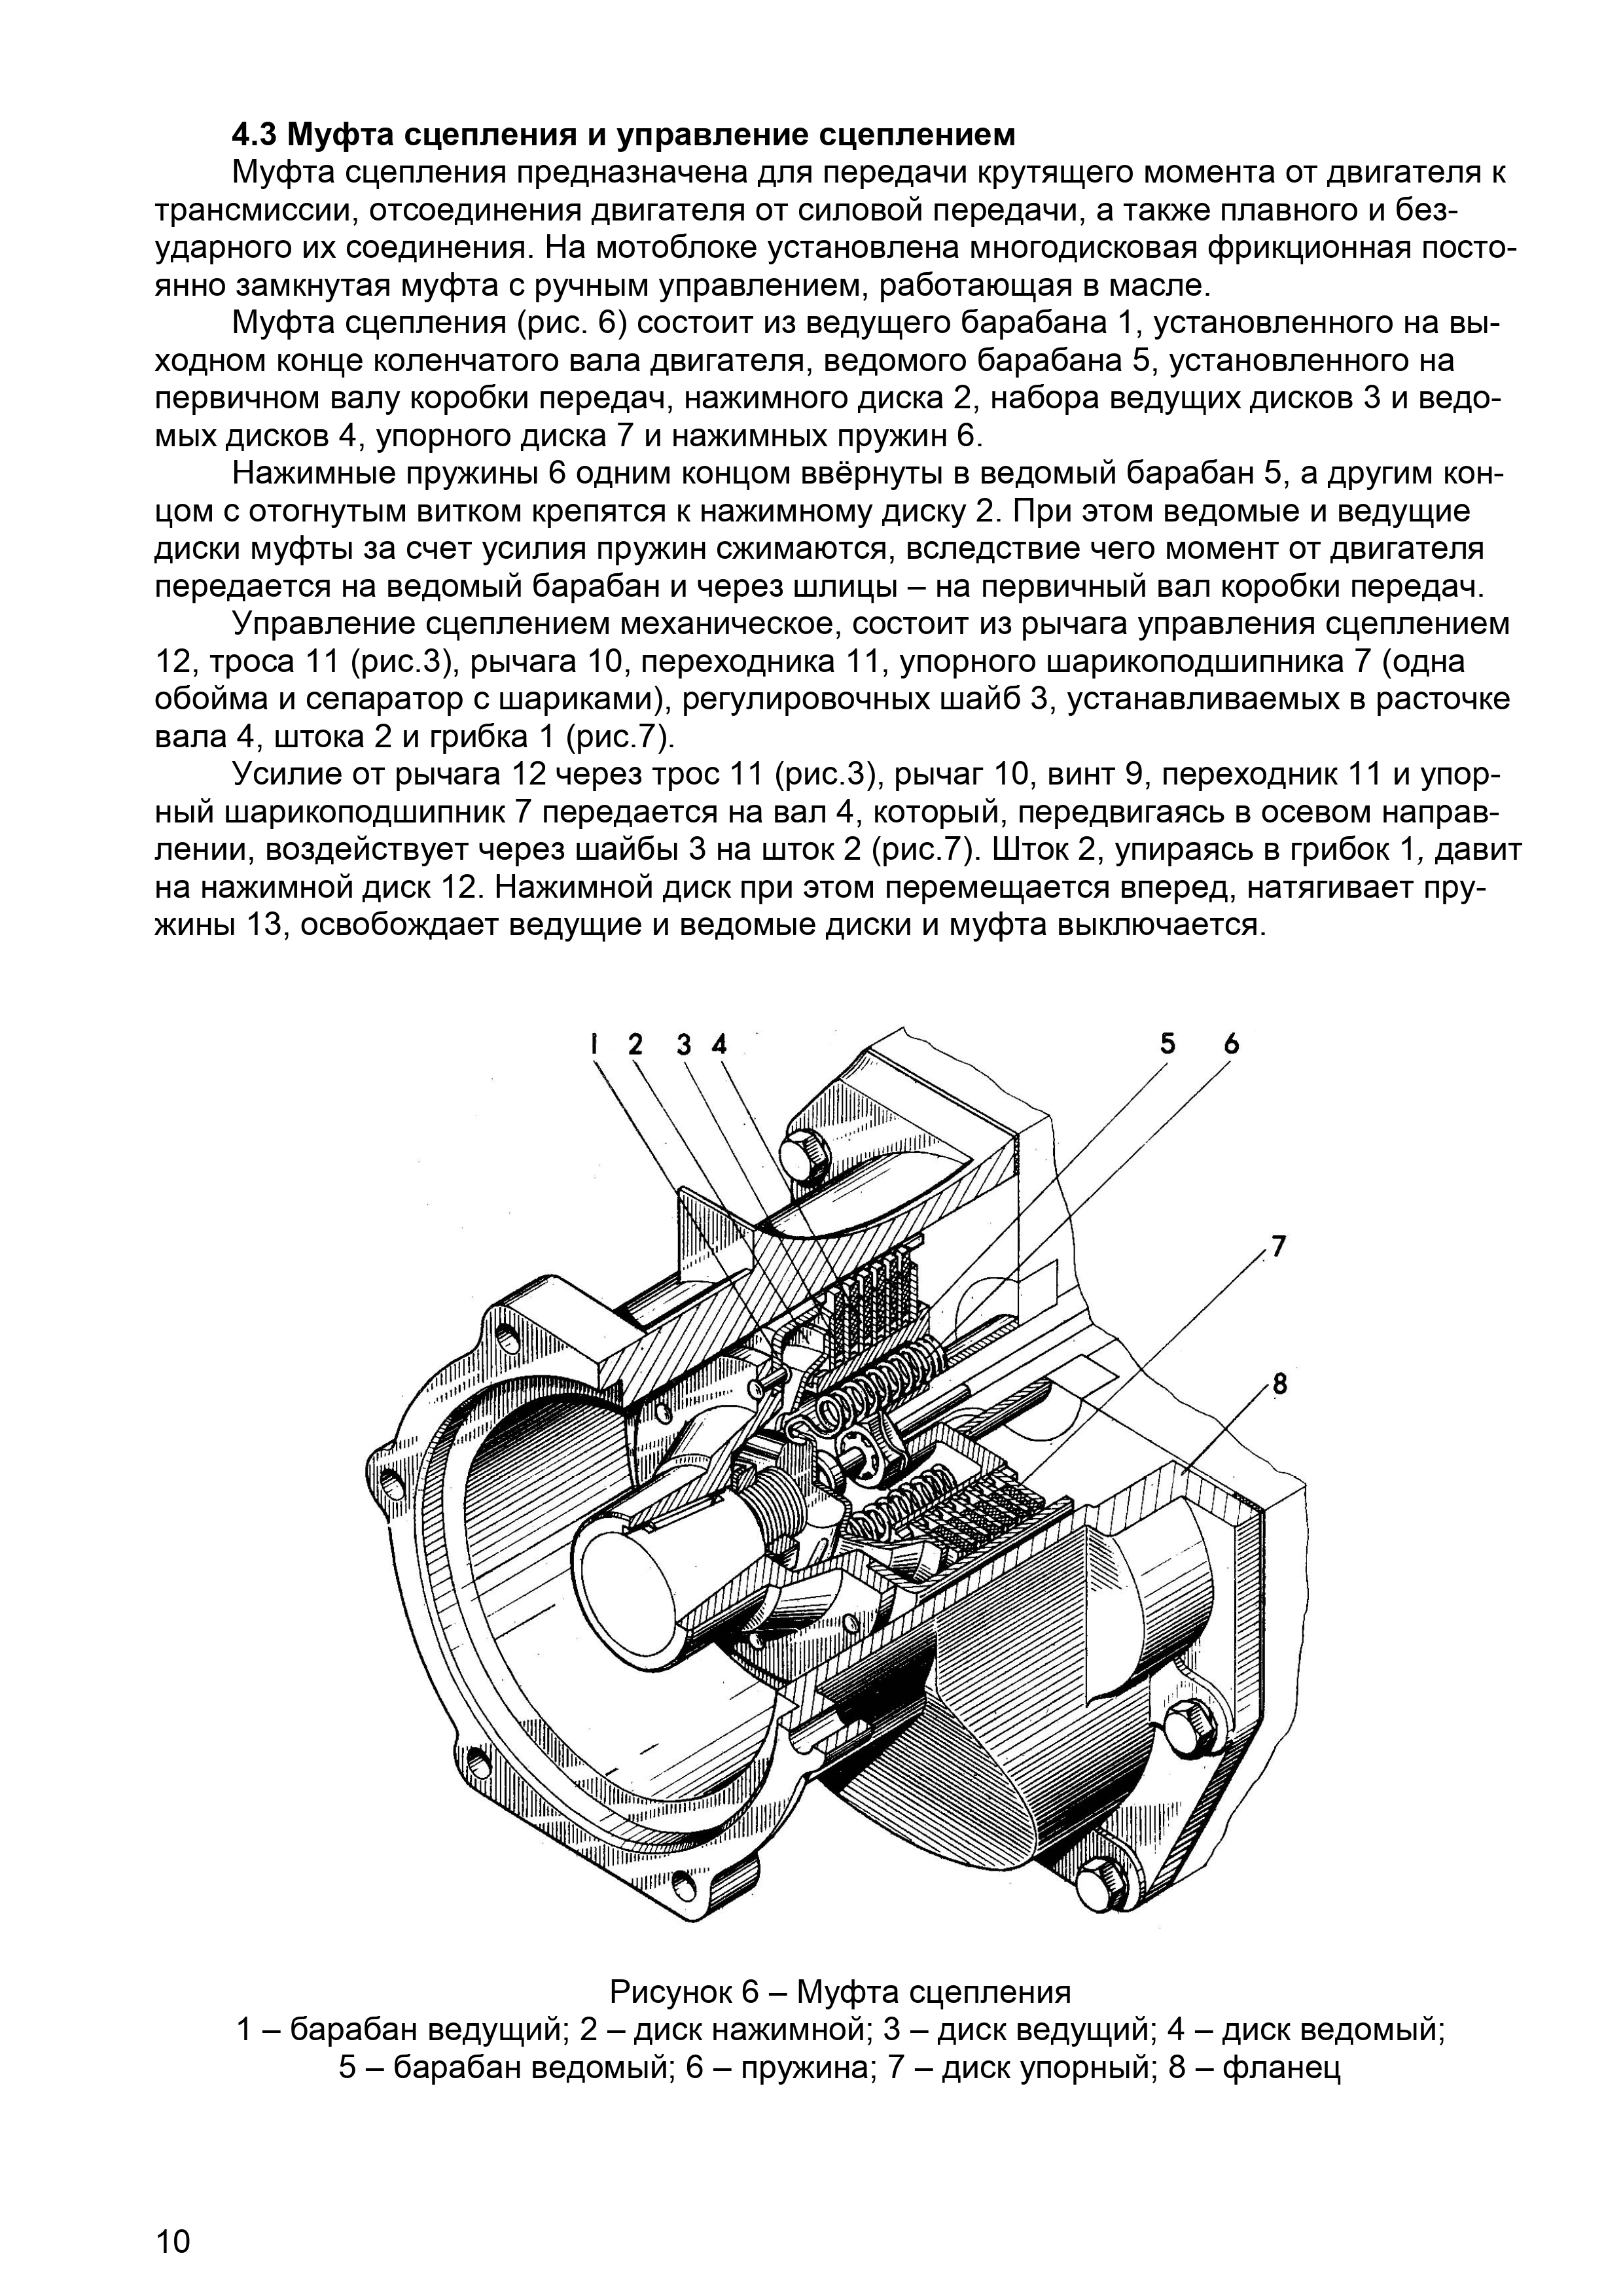 belarus_09h_manual i catalog (1)_page-0010